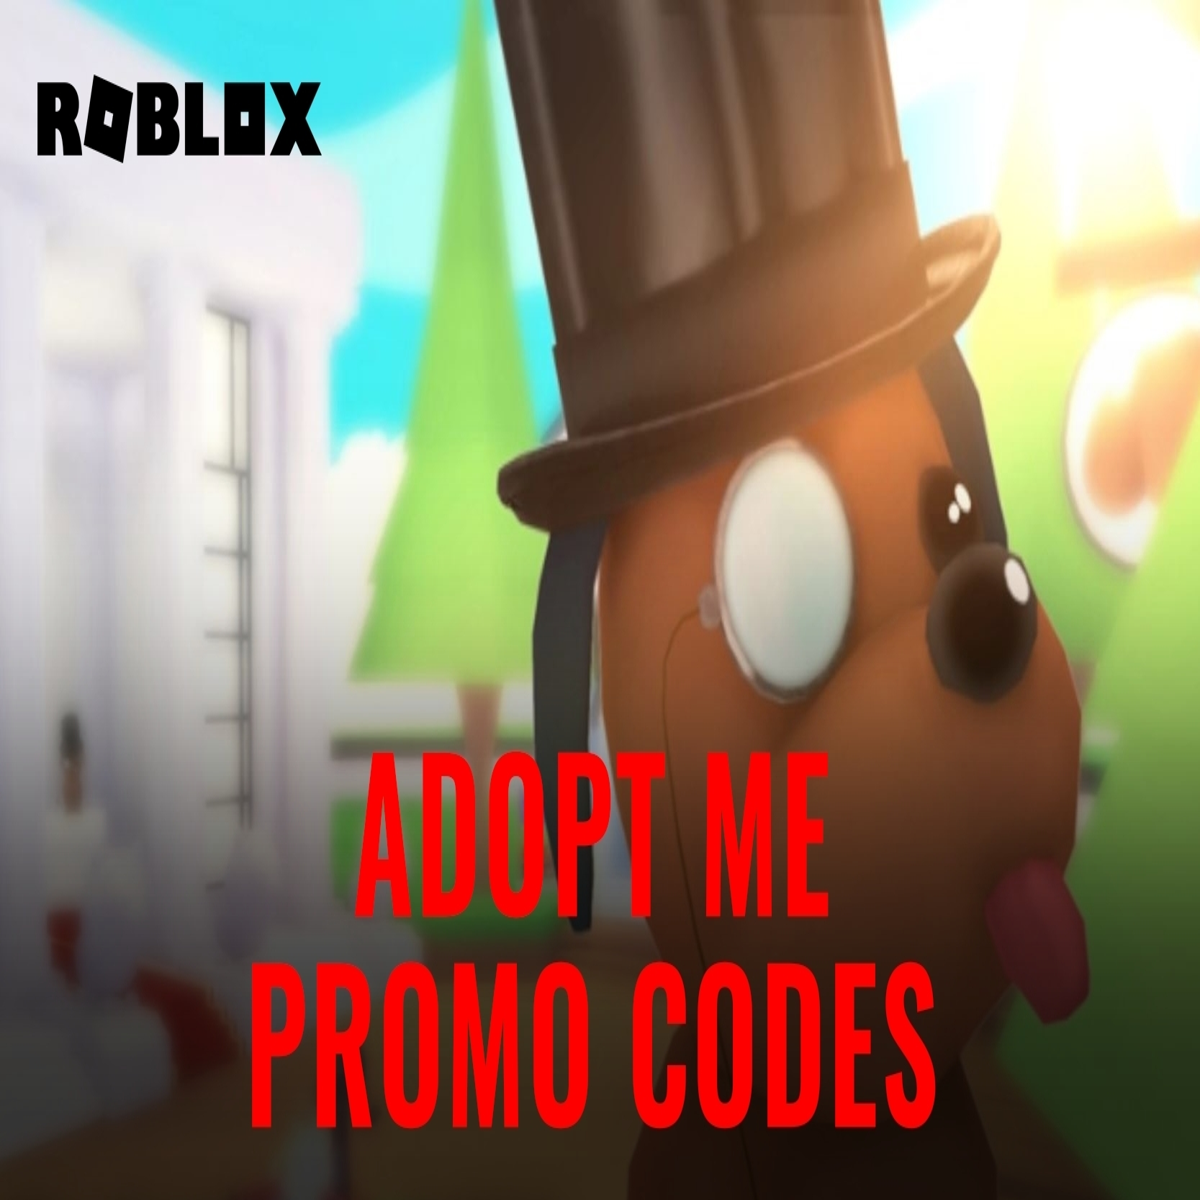 Roblox: Adopt Me! Codes